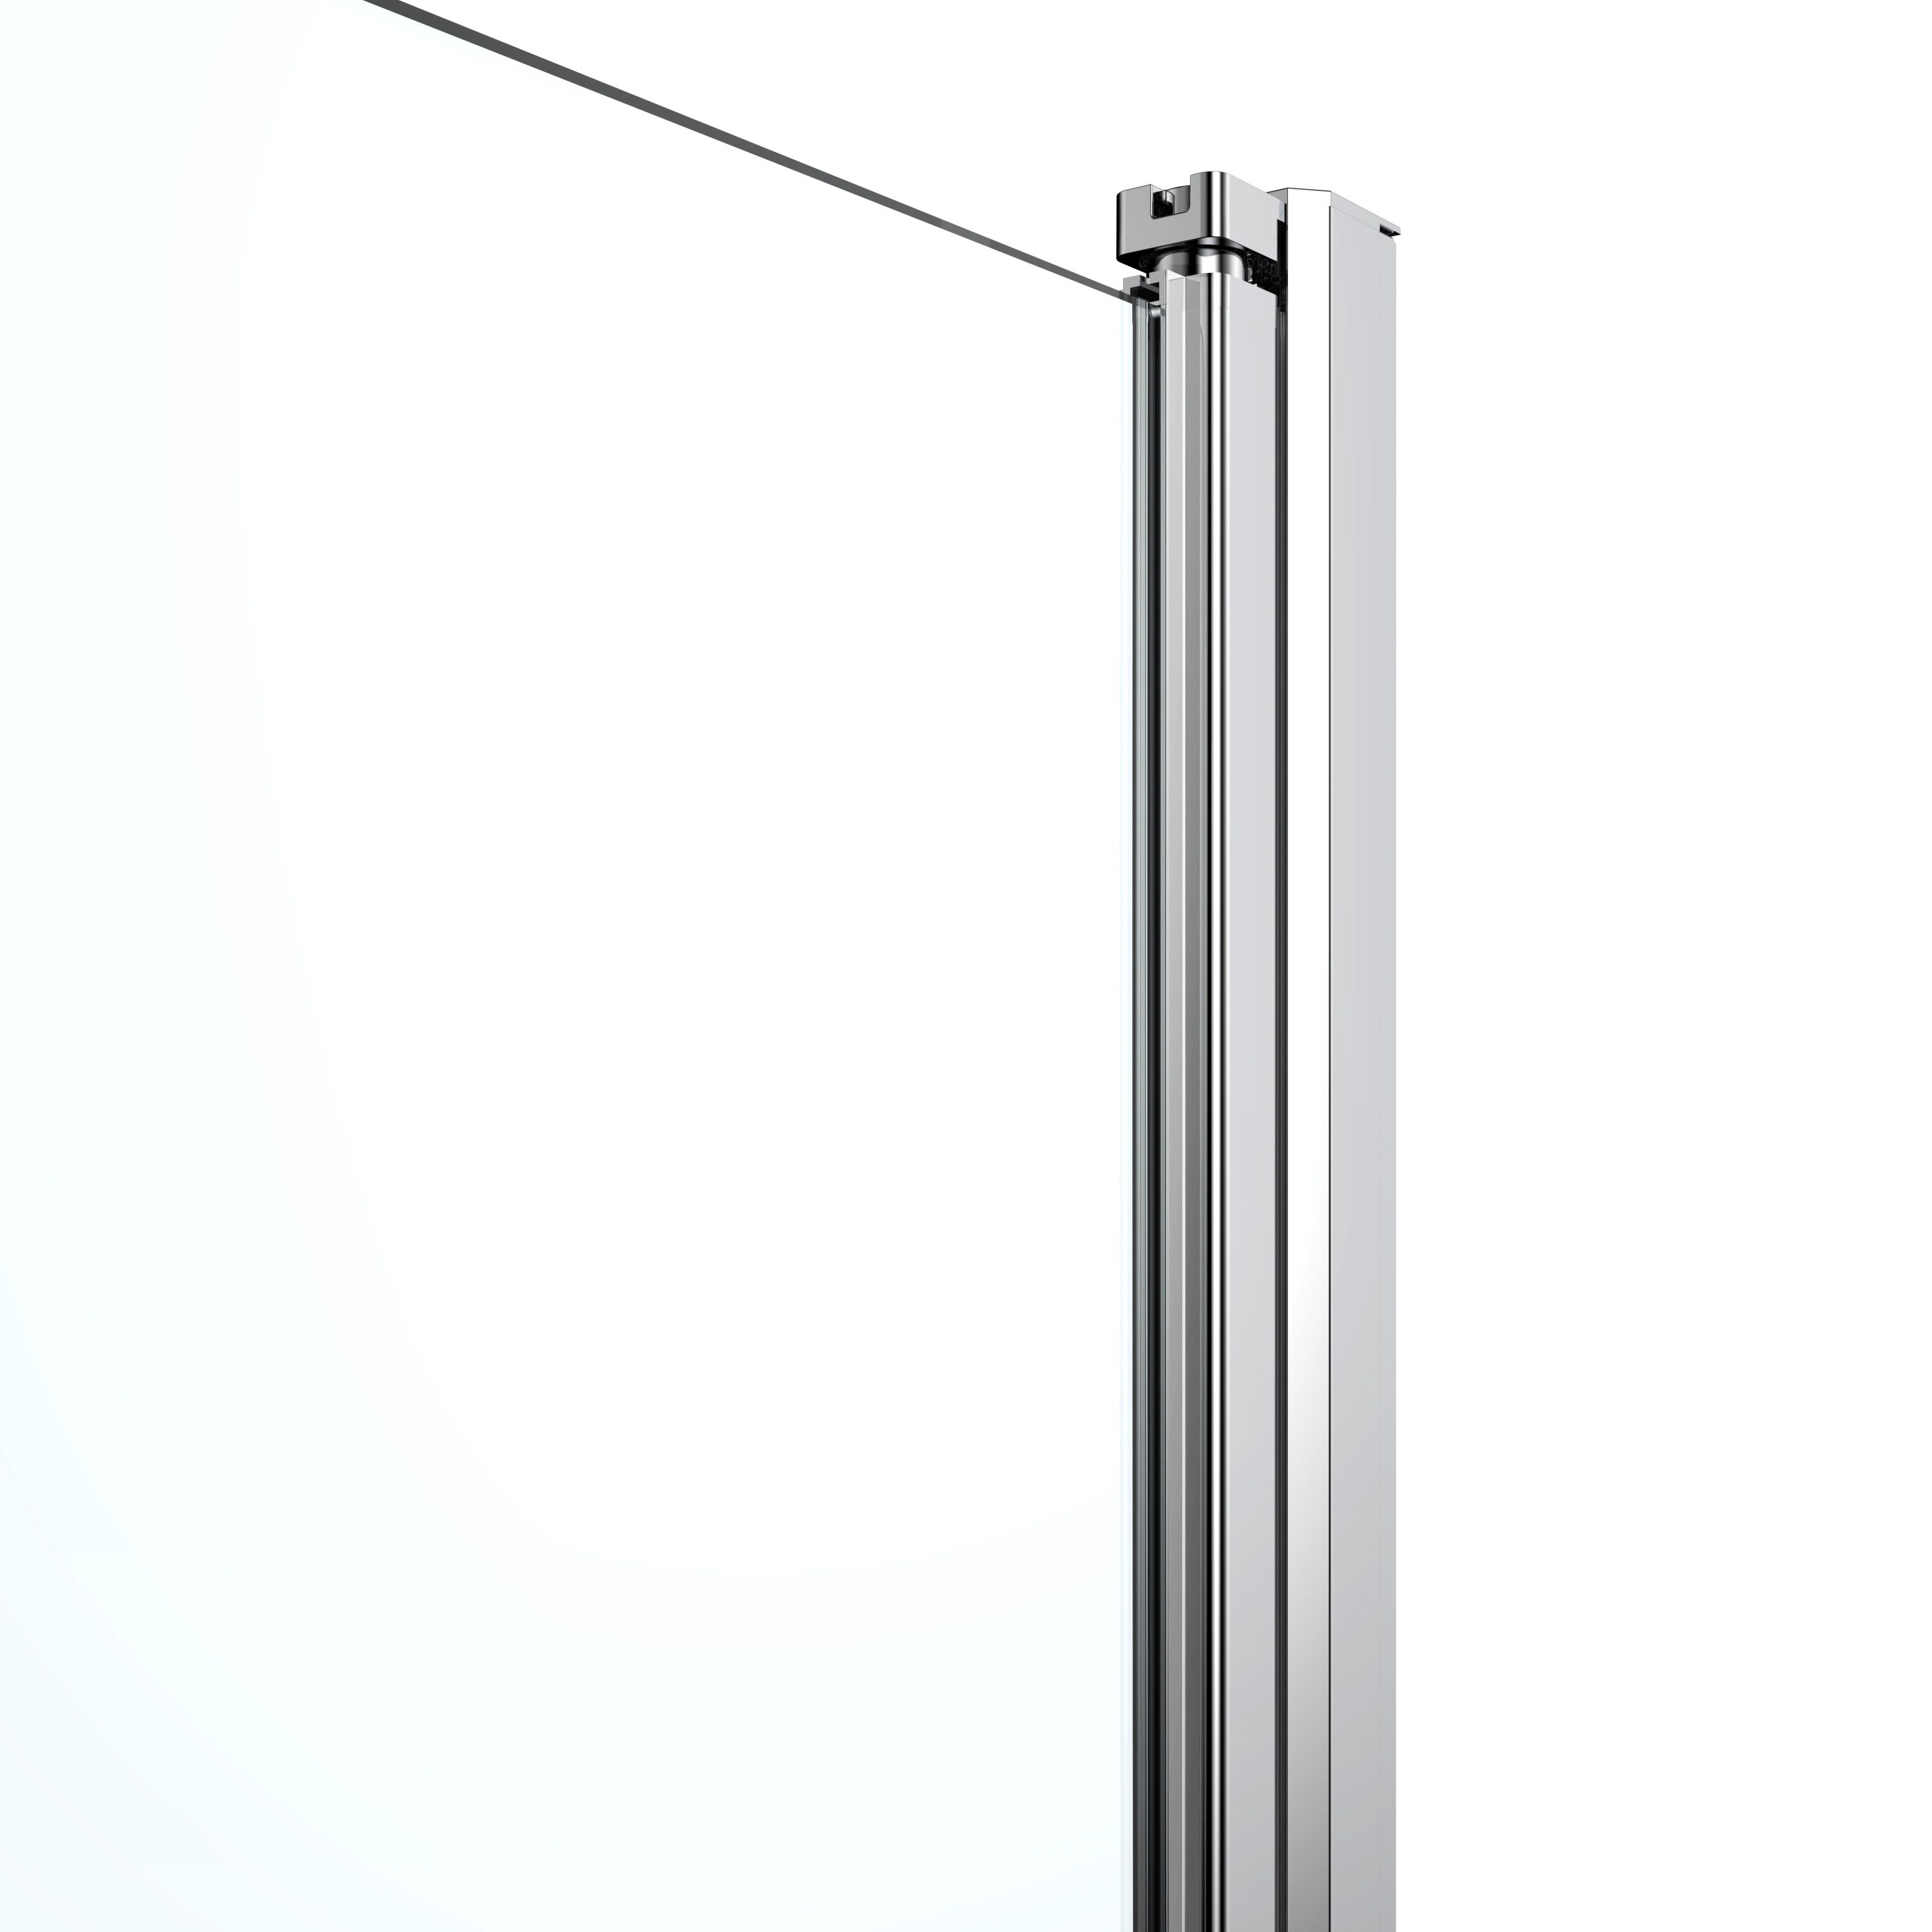 GoodHome Ledava Minimal frame Chrome effect Clear glass Western Shower Door (H)195cm (W)76cm